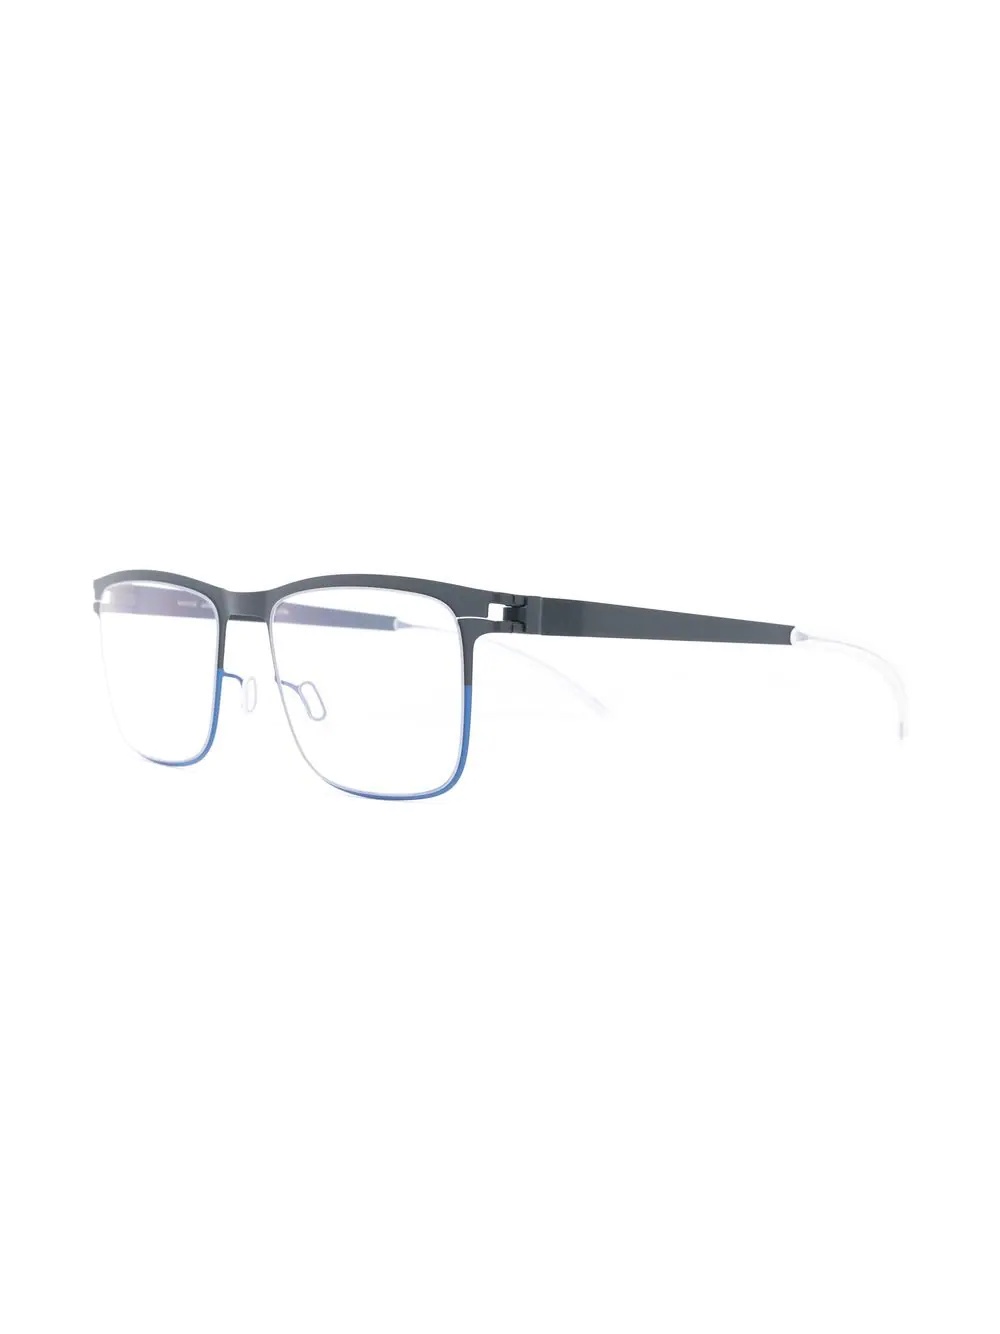 Armin square-frame glasses - 2